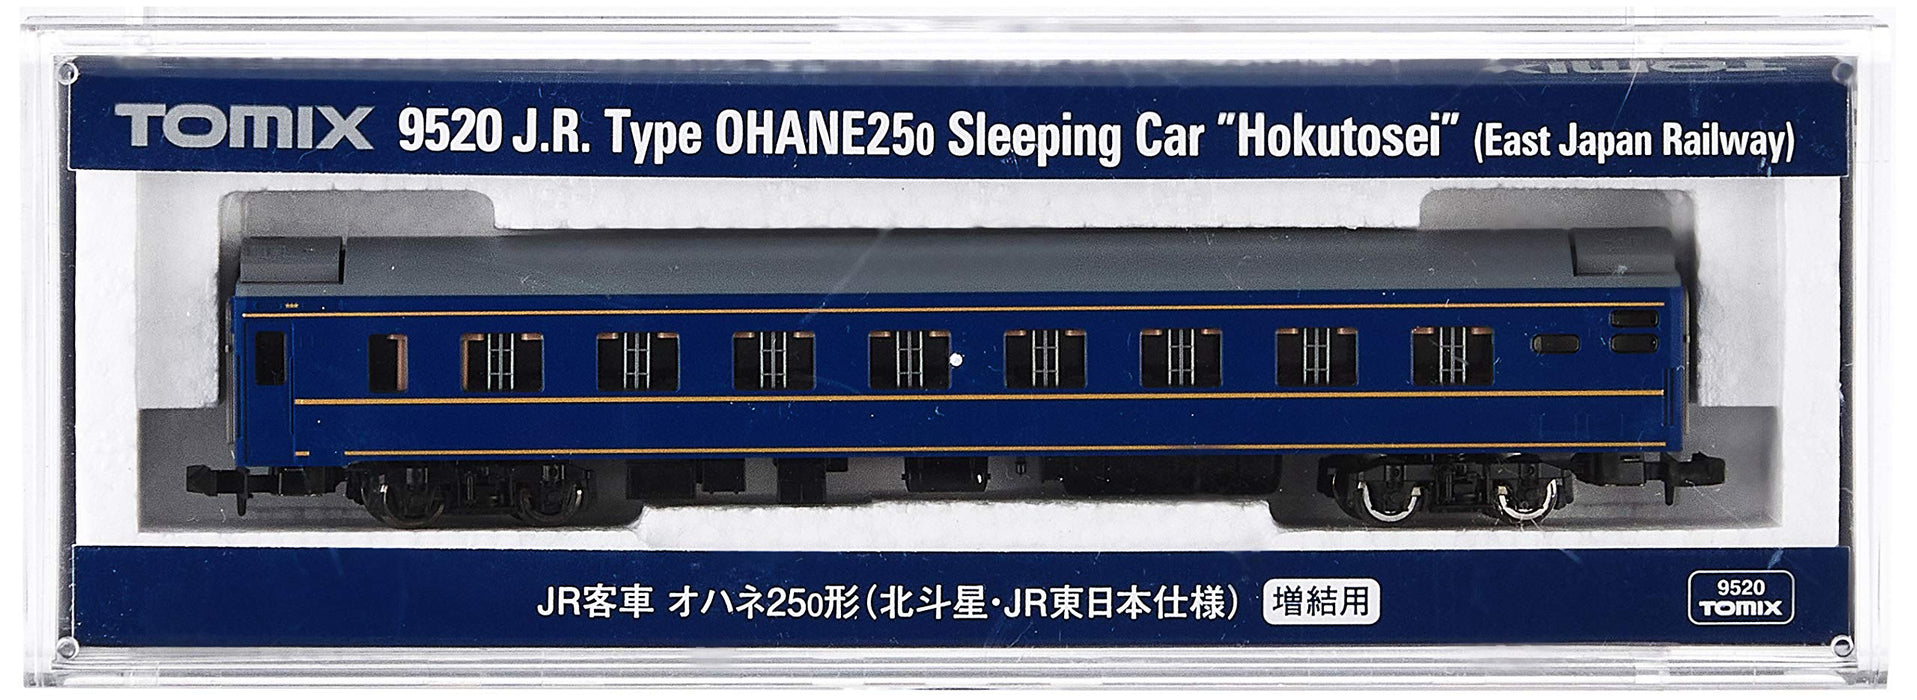 Tomytec Tomix Spur N Ohane 25 0 Hokutosei Personenwagen – JR East Modell 9520